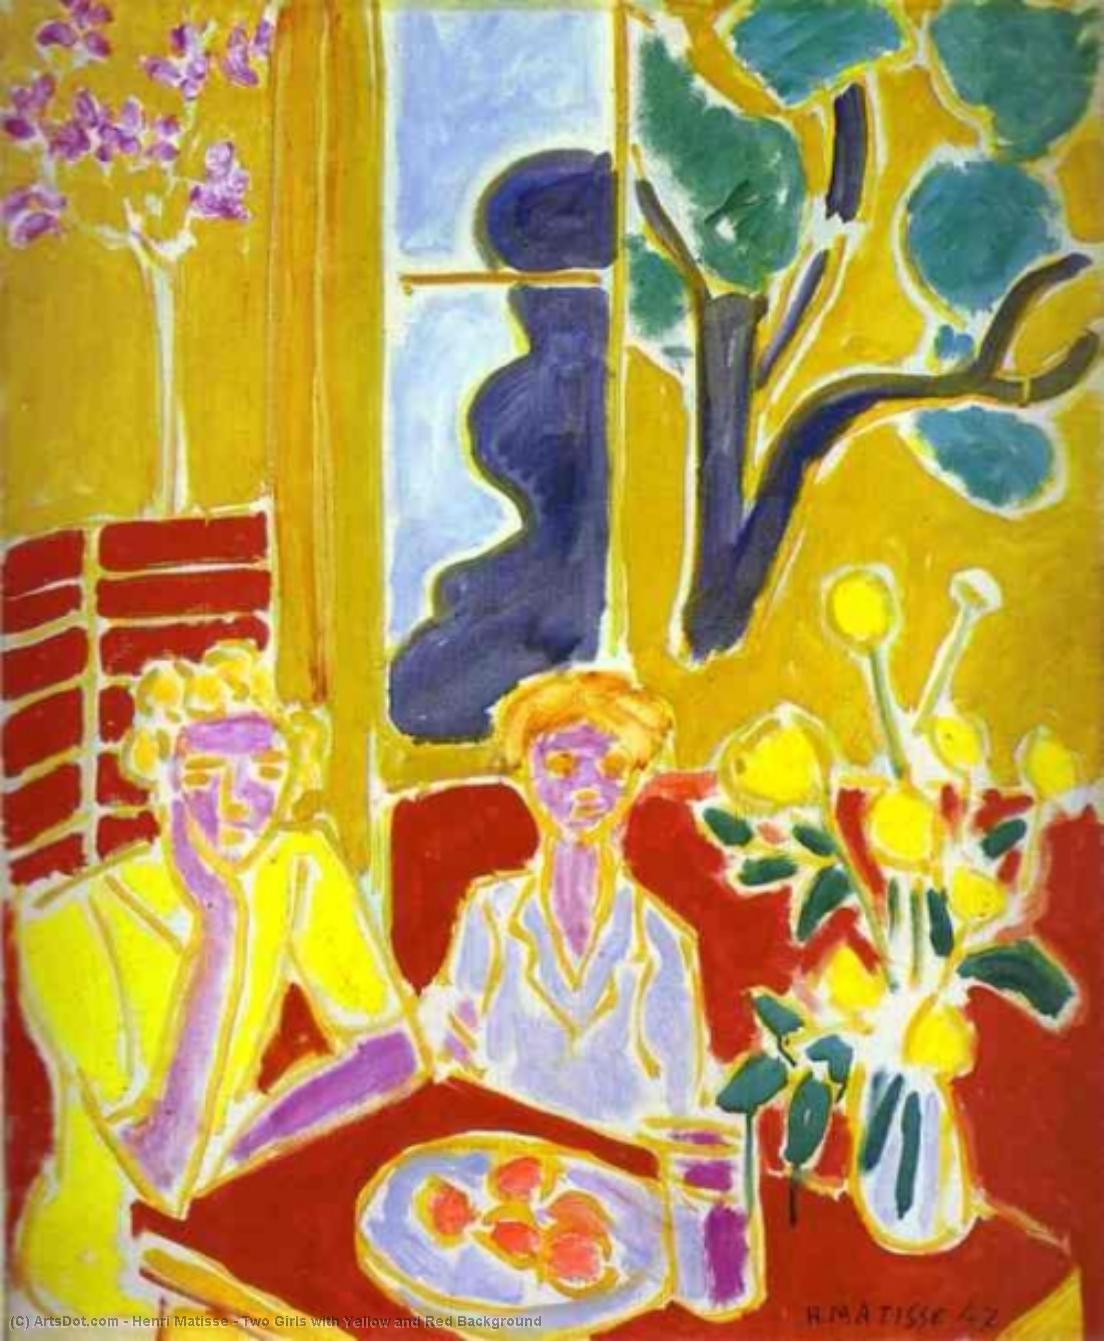 WikiOO.org - Енциклопедія образотворчого мистецтва - Живопис, Картини
 Henri Matisse - Two Girls with Yellow and Red Background